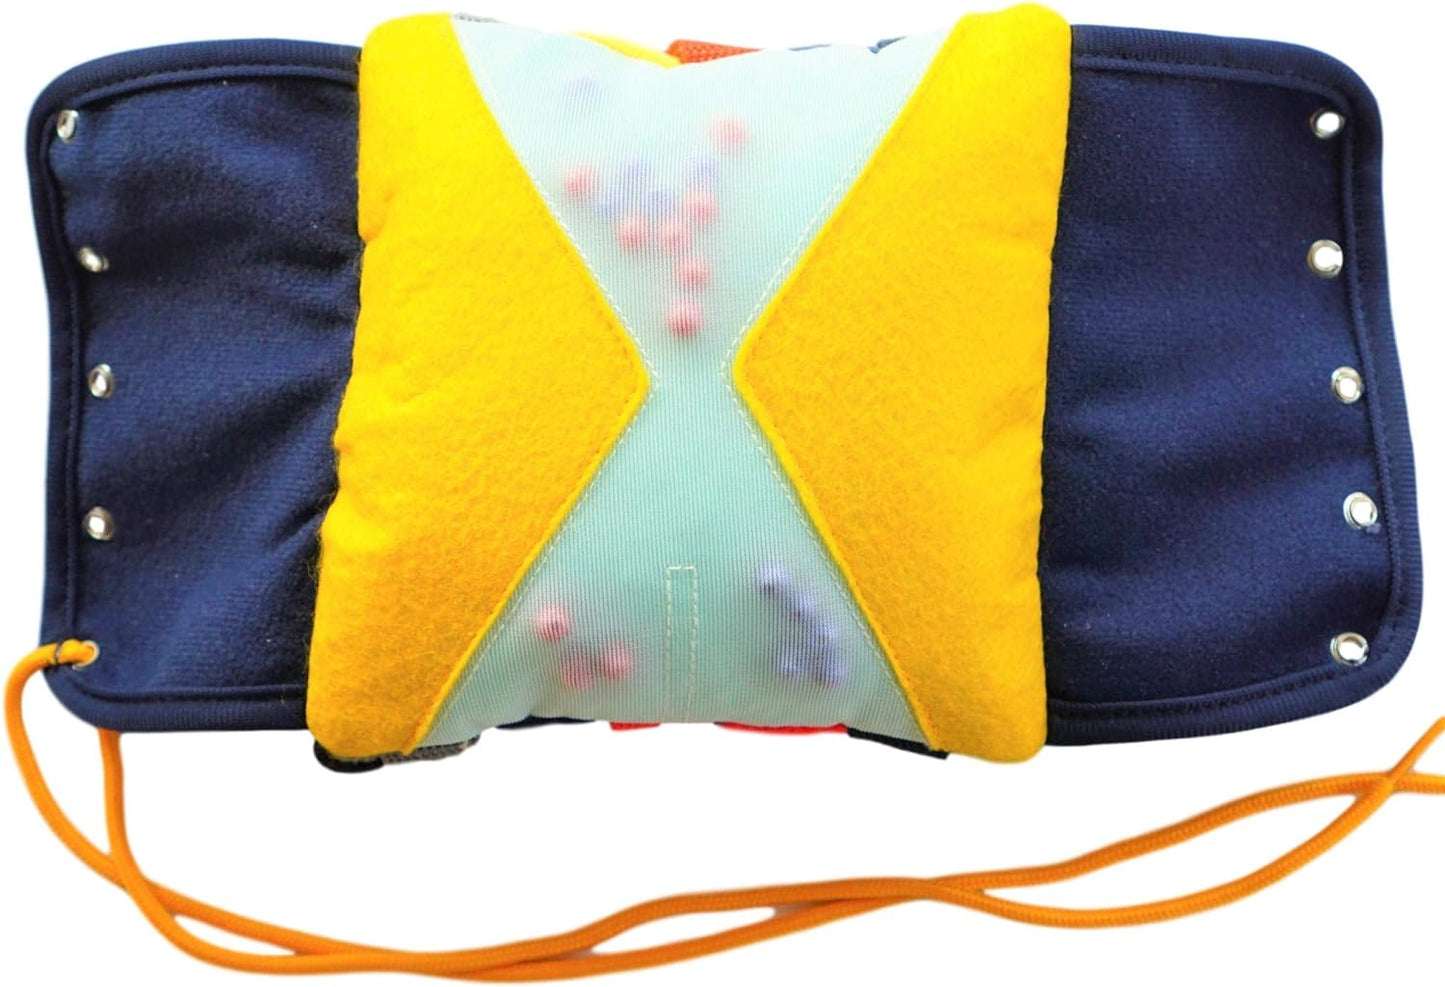 Activity Pillows, Activity Pillow for kids, Sensory Activity Pillows